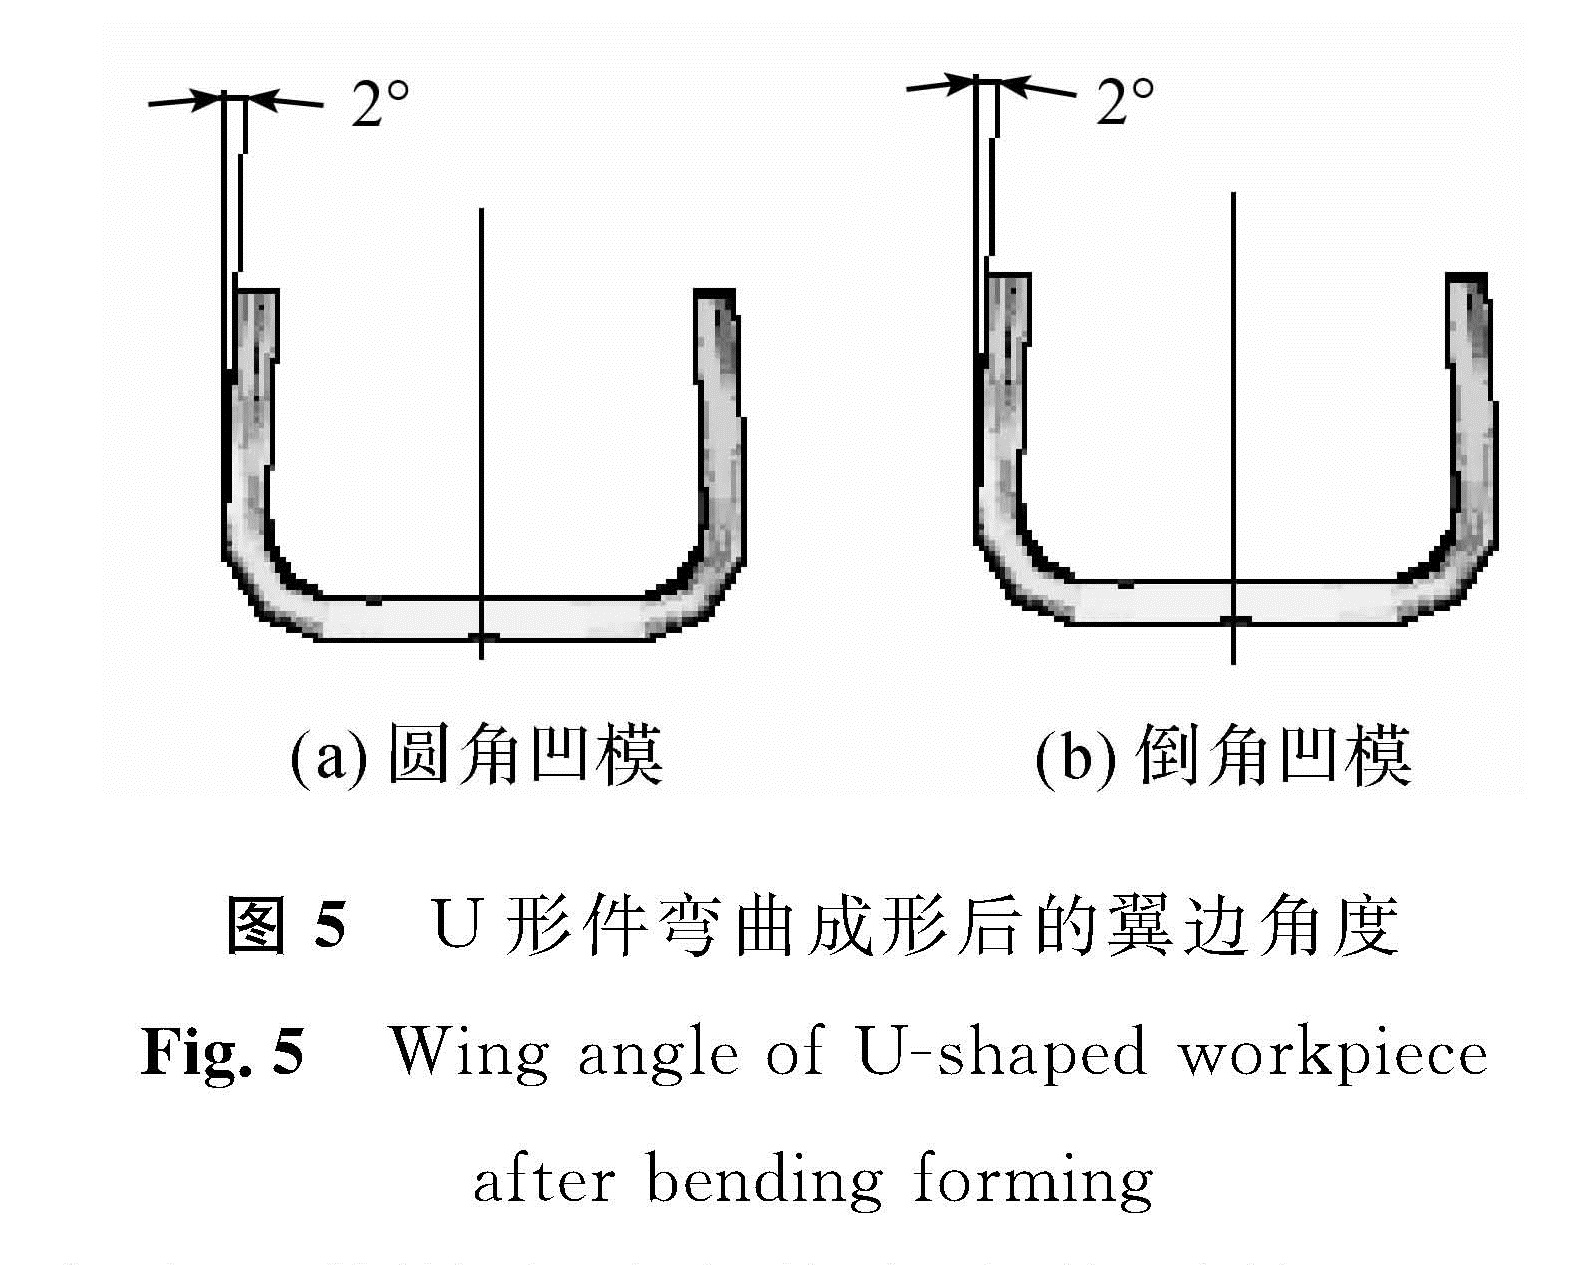 图5 U形件弯曲成形后的翼边角度<br/>Fig.5 Wing angle of U-shaped workpiece after bending forming